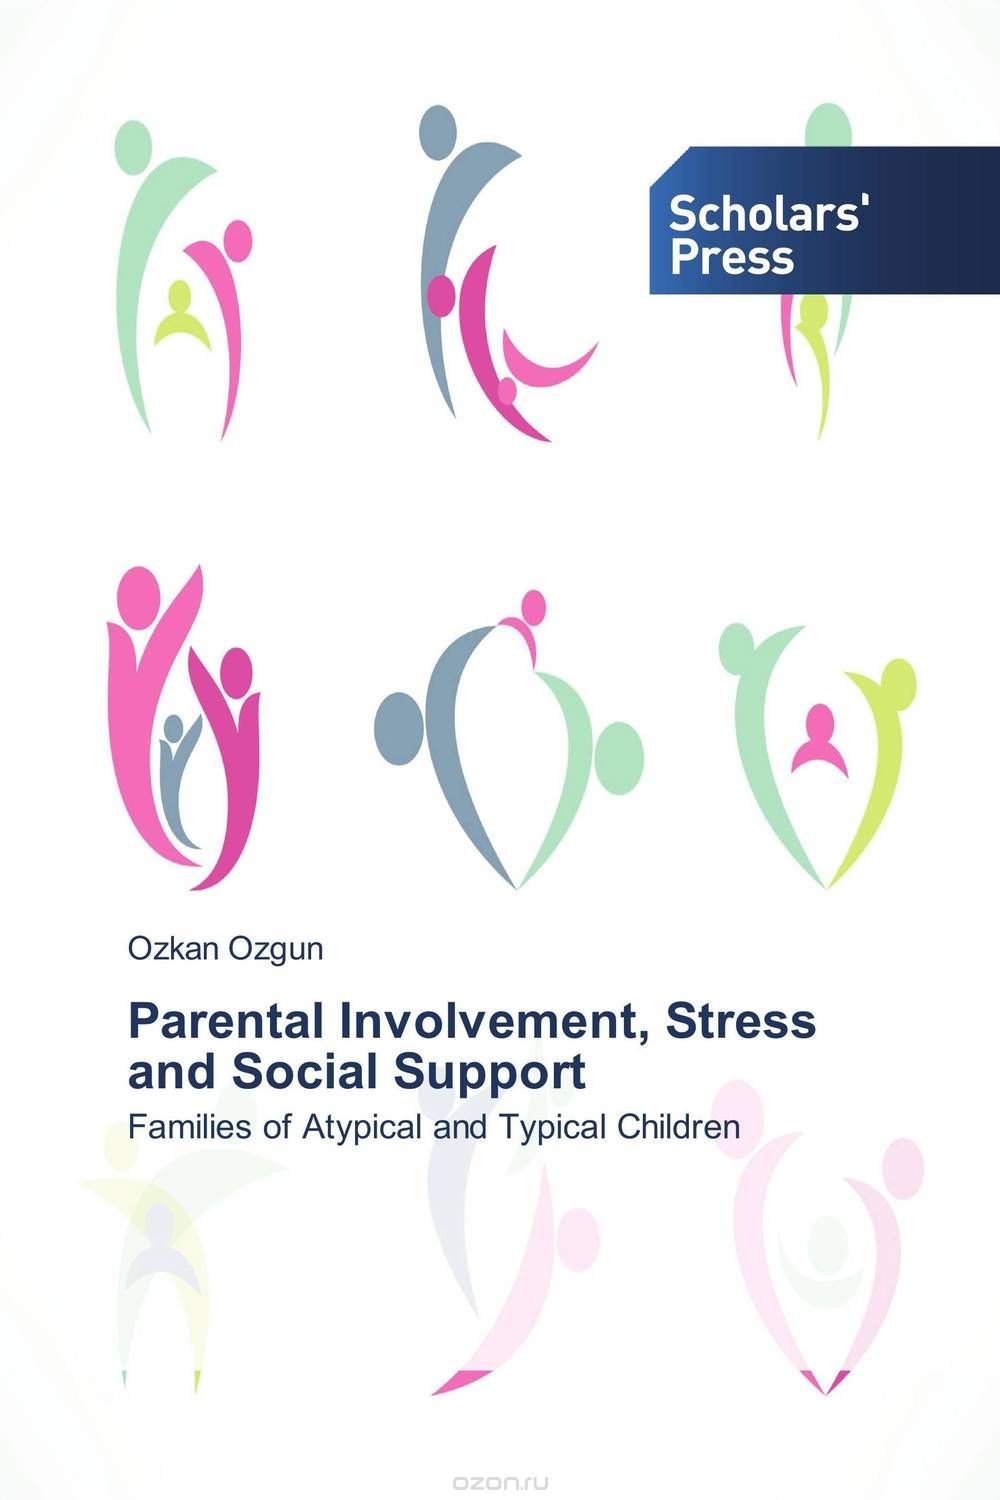 Скачать книгу "Parental Involvement, Stress and Social Support"